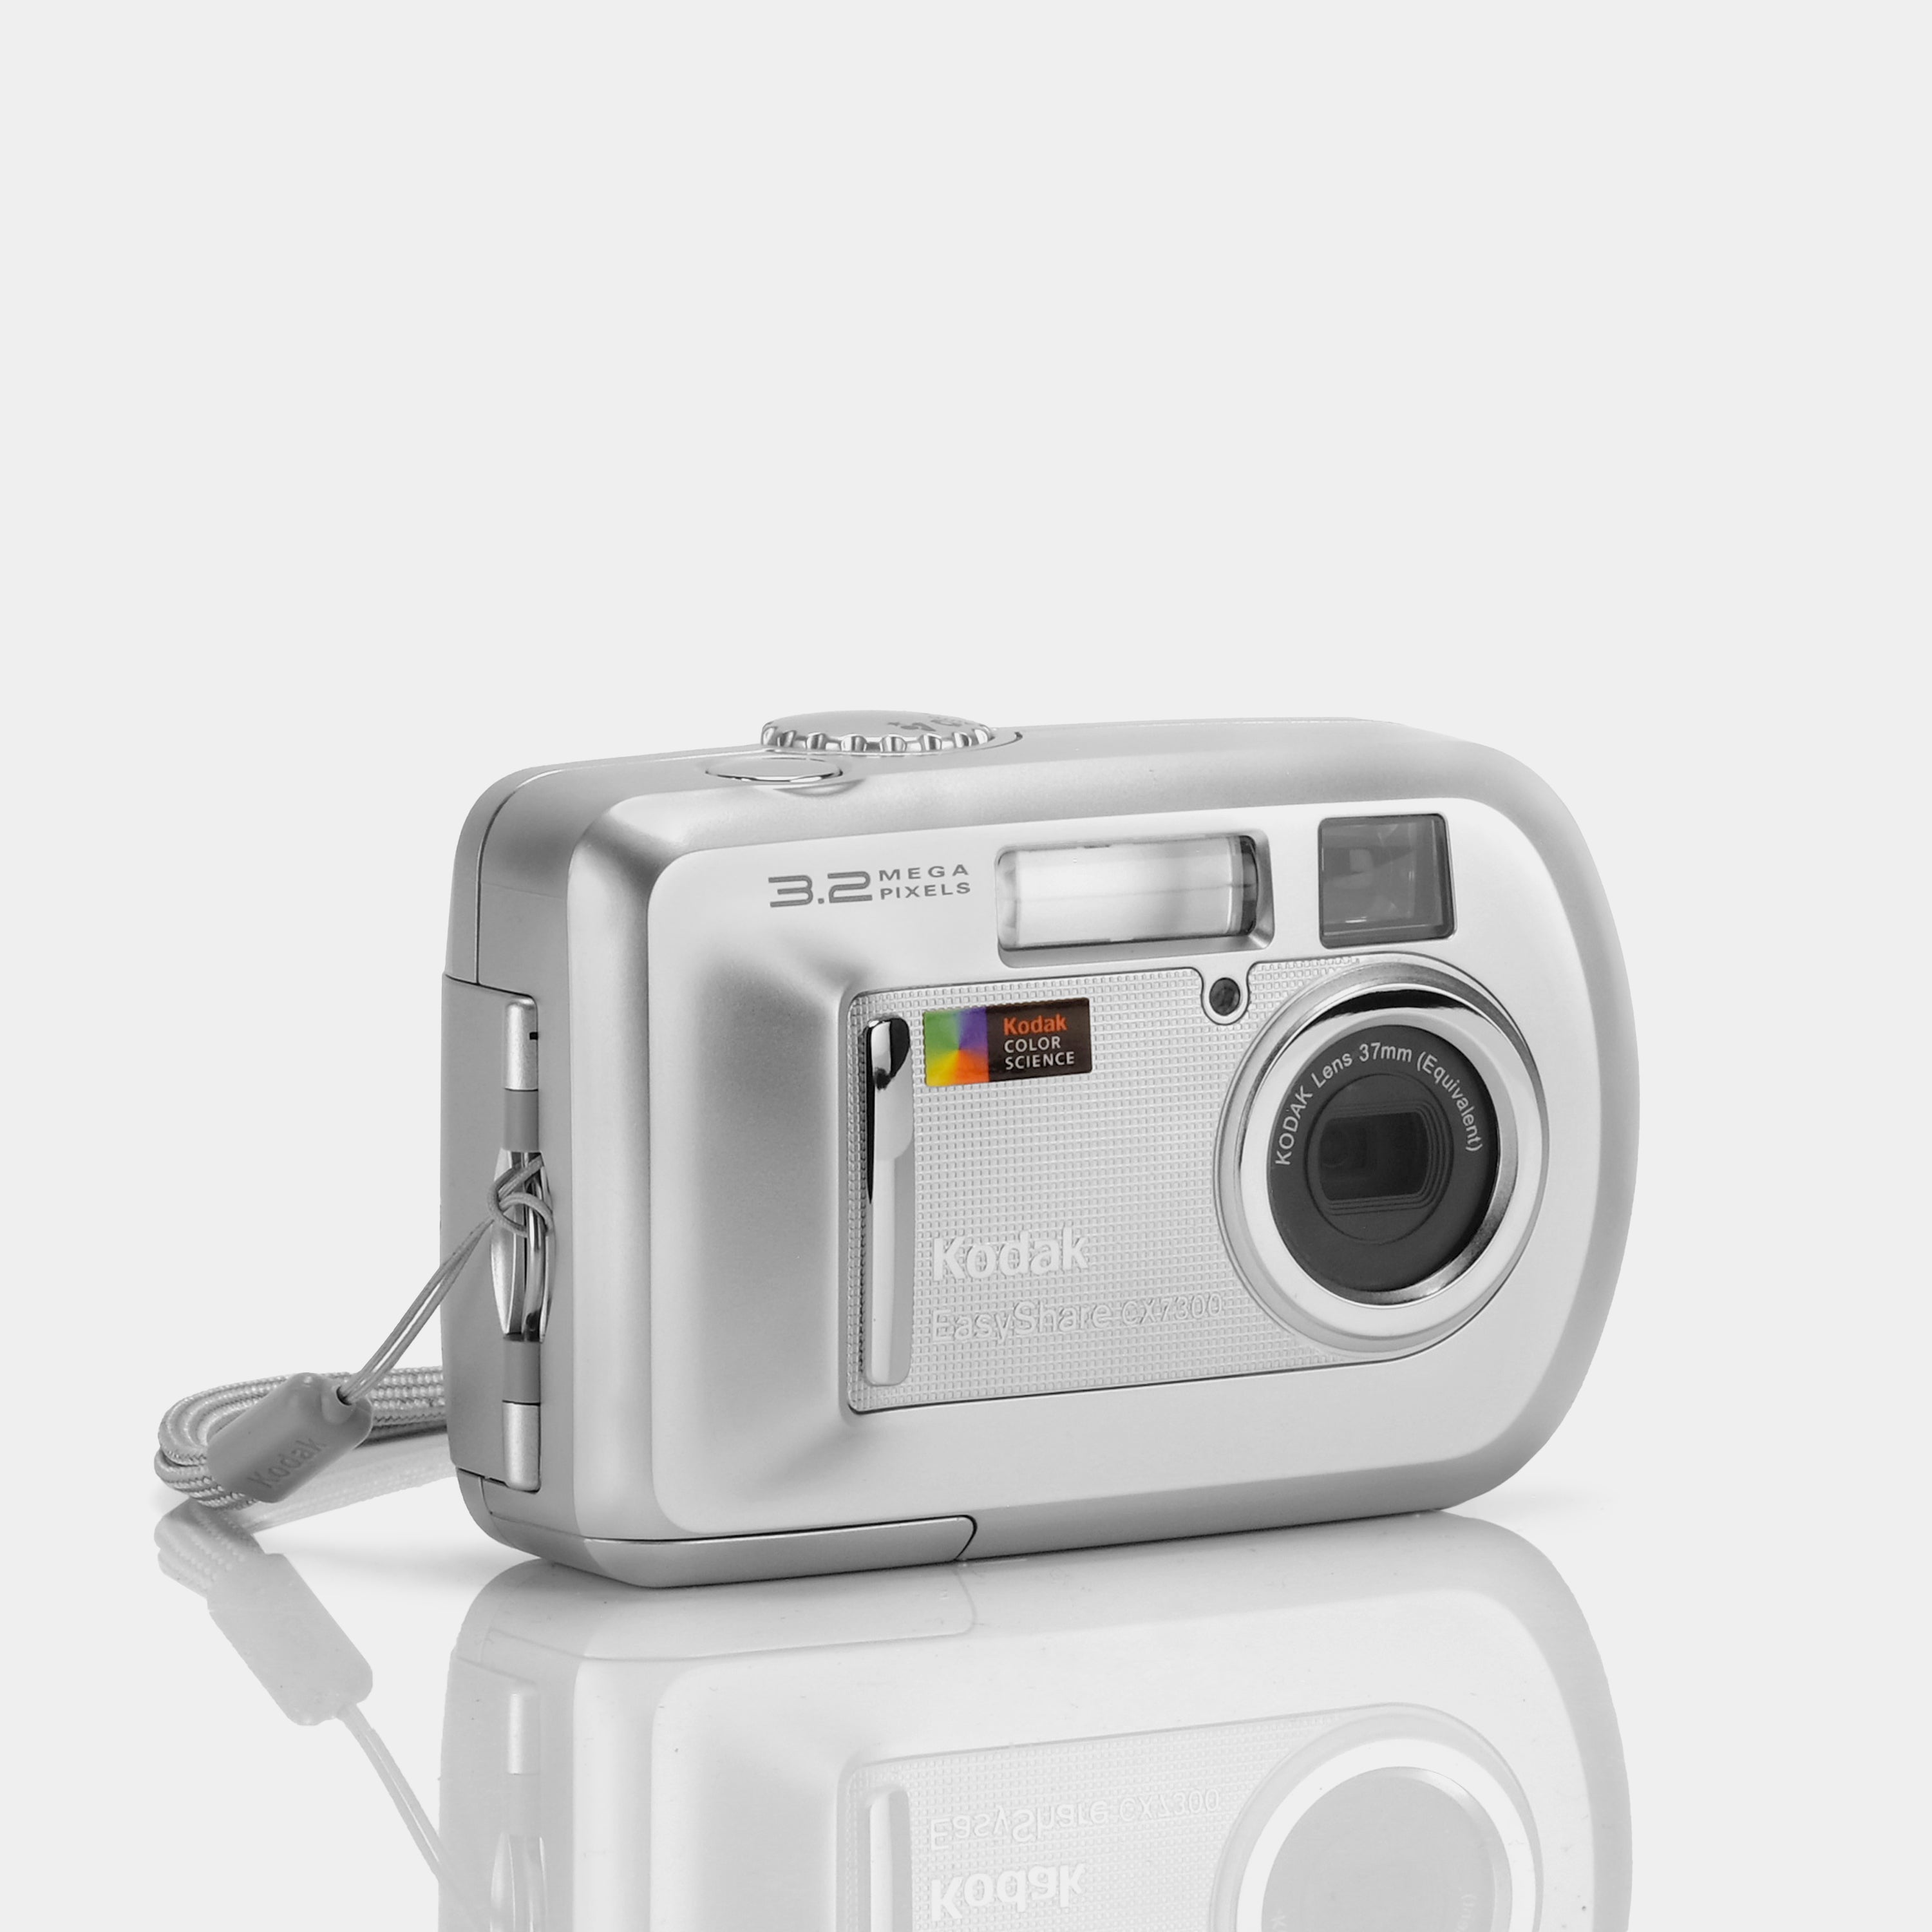 Kodak EasyShare CX7300 Point and Shoot Digital Camera